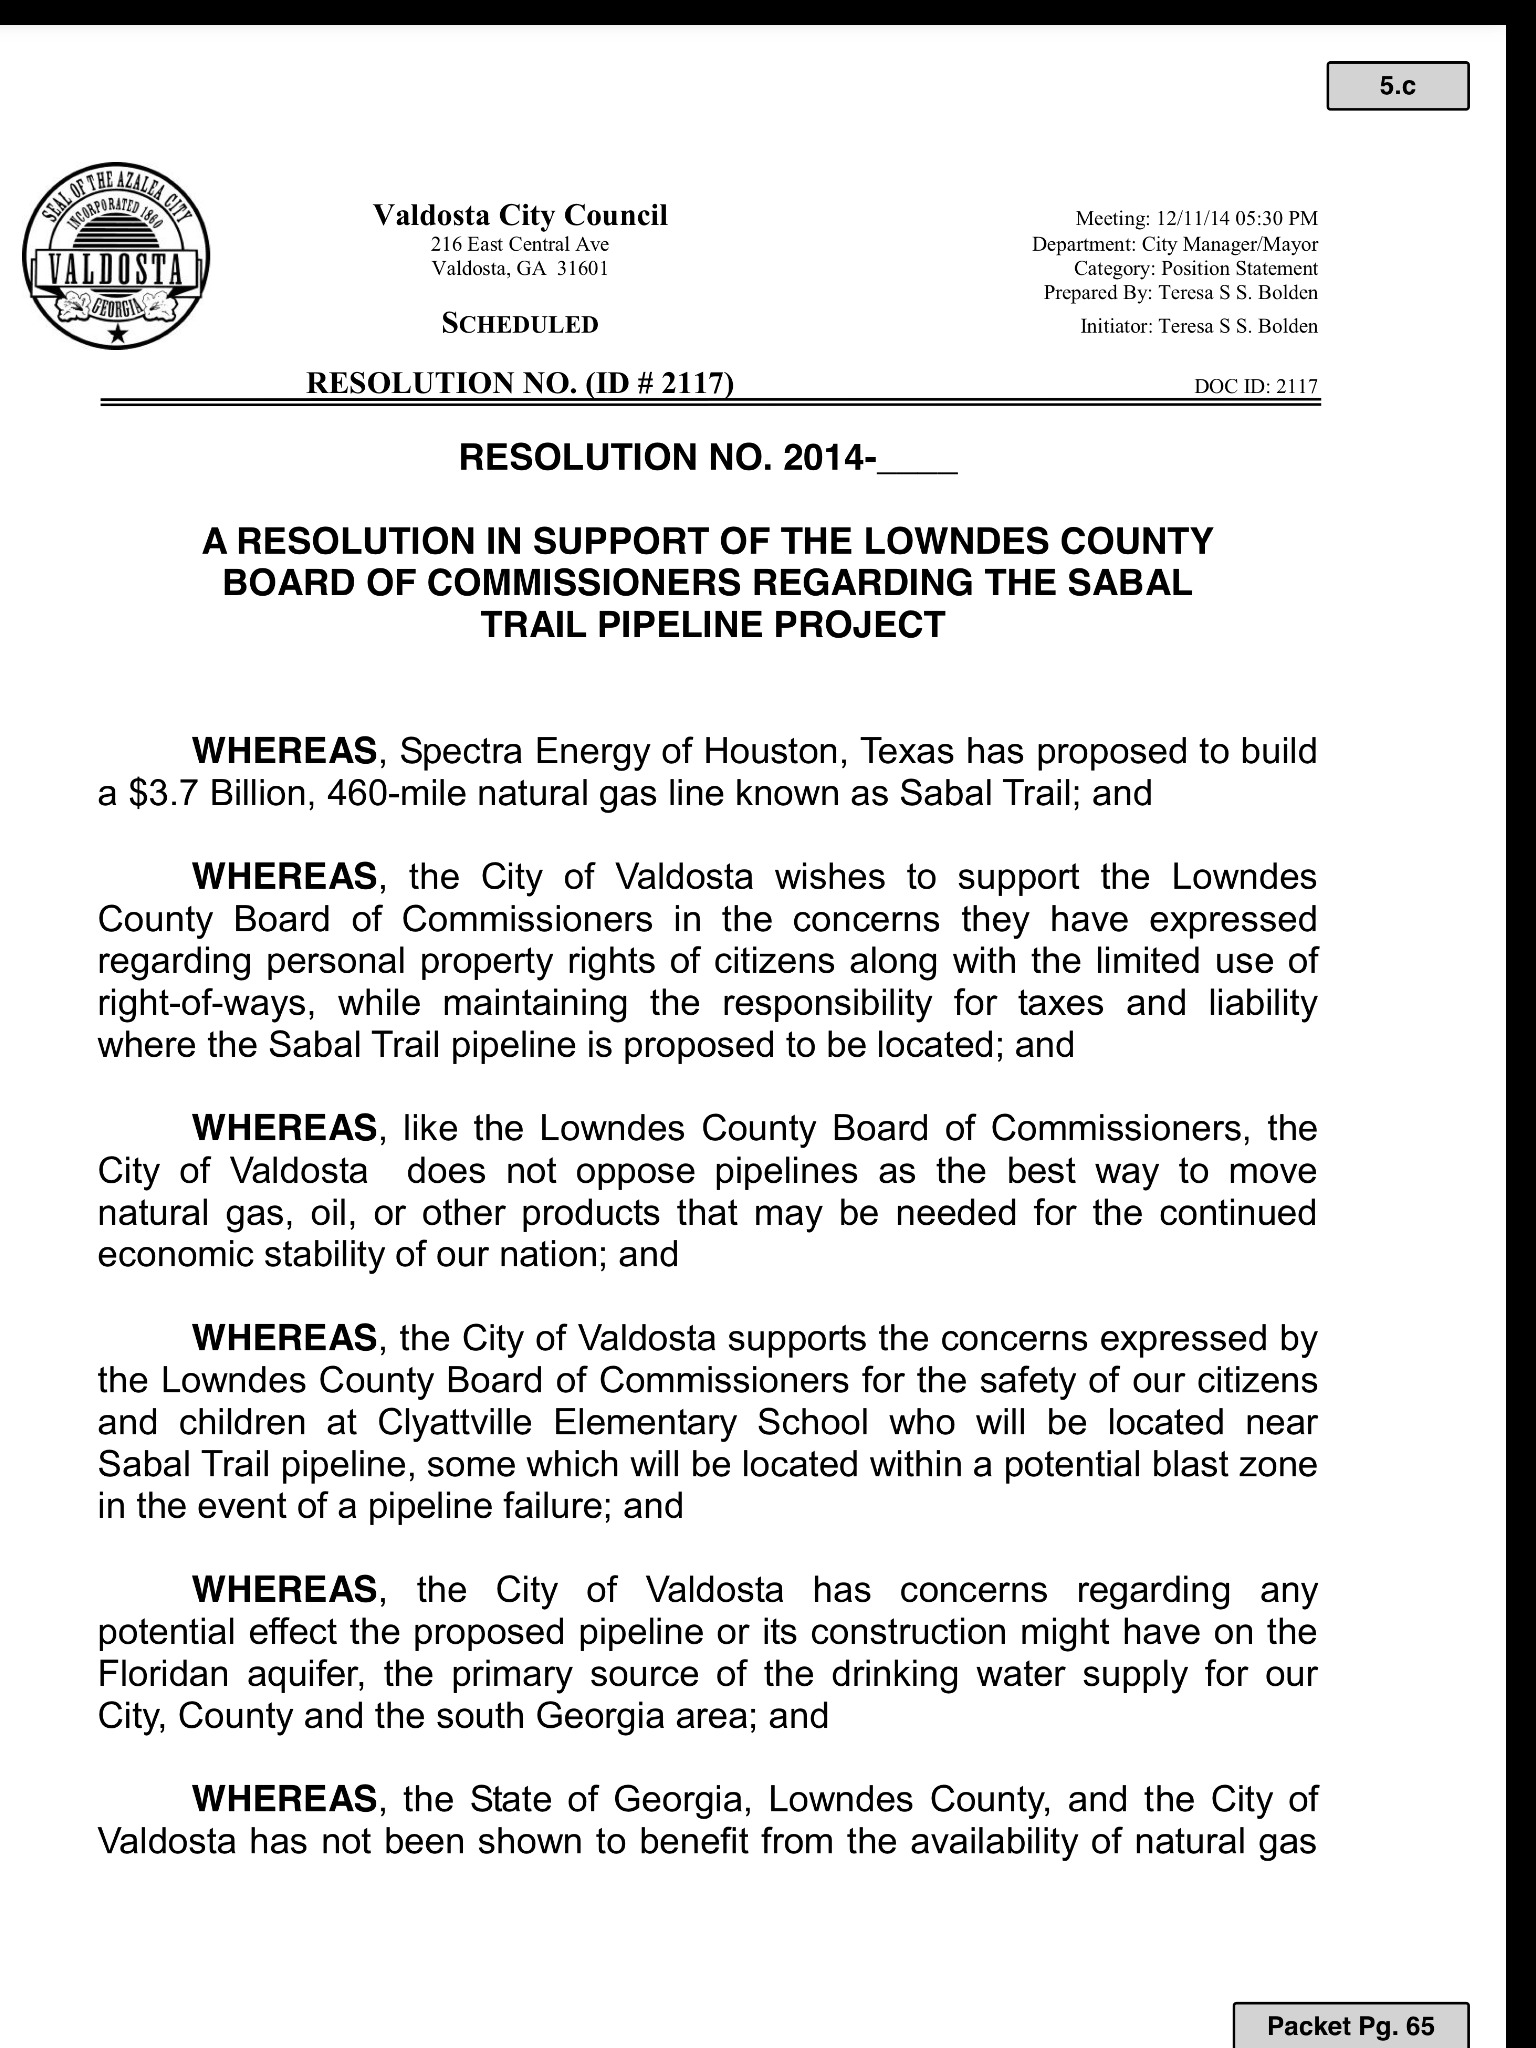 1536x2048 Whereas, in Valdosta Draft Resolution Against Sabal Trail Pipeline, by Valdosta City Council, 10 December 2014